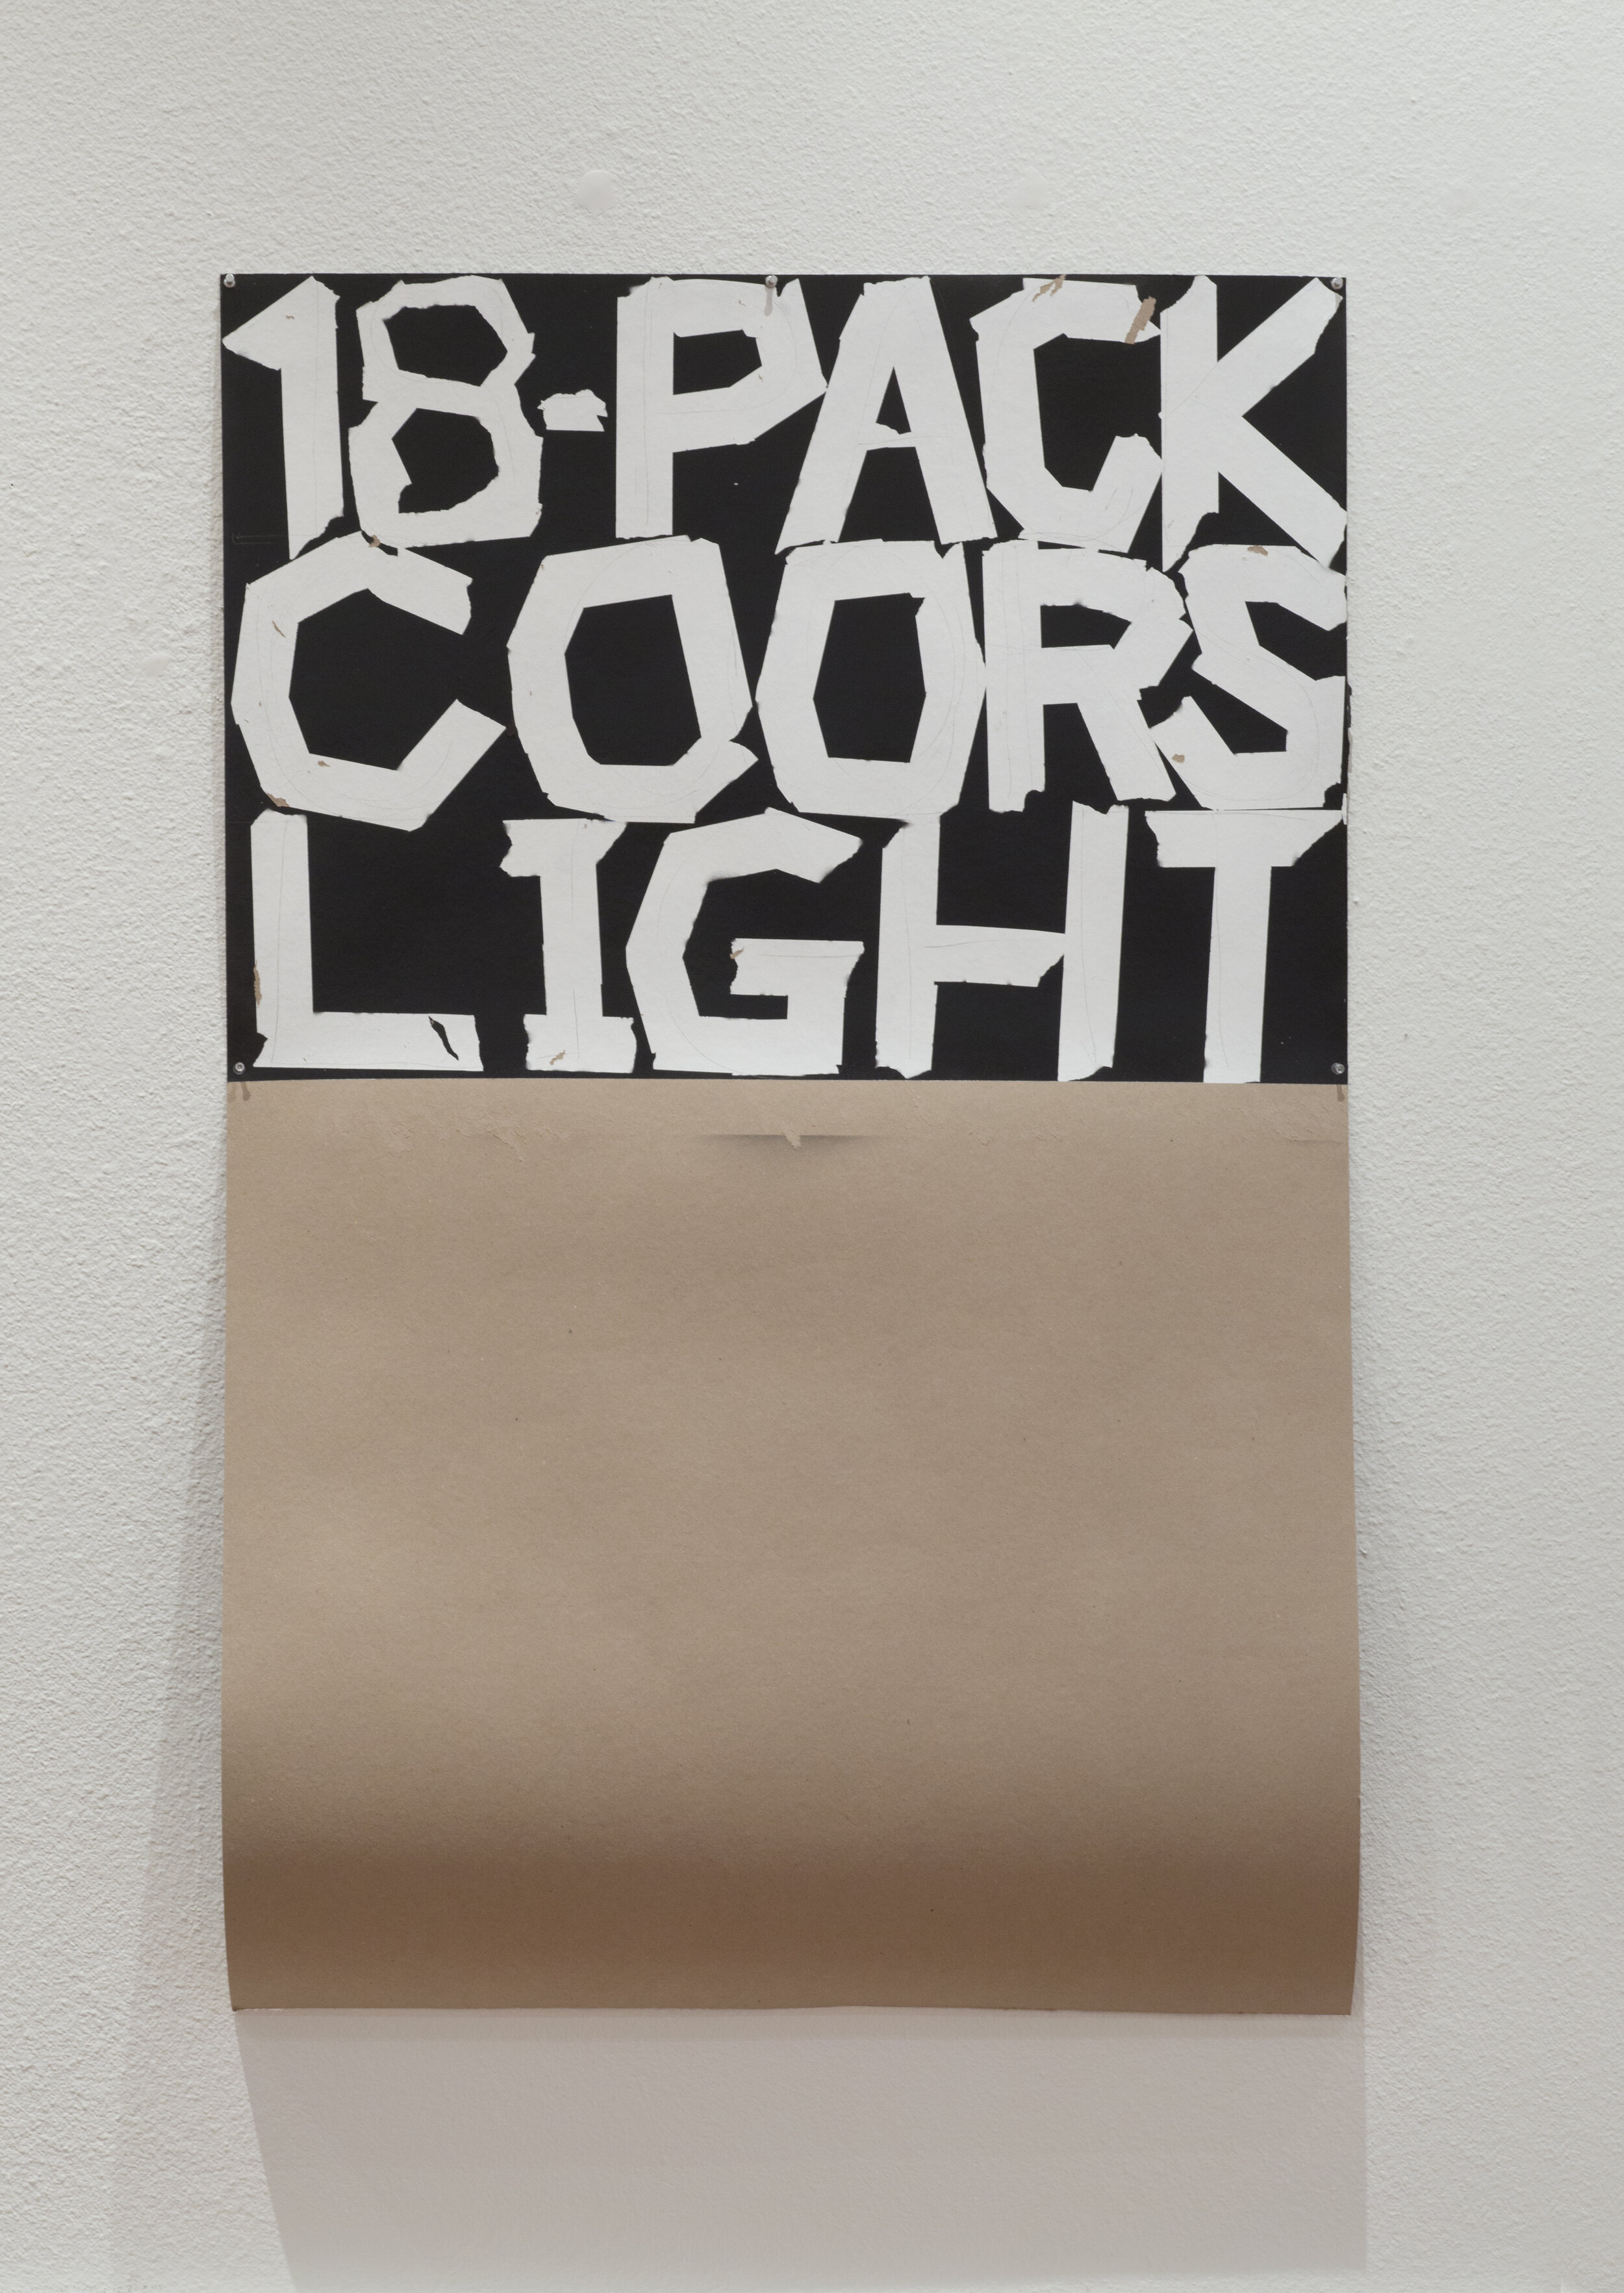 Graffiti (18-Pack Coors Light) 